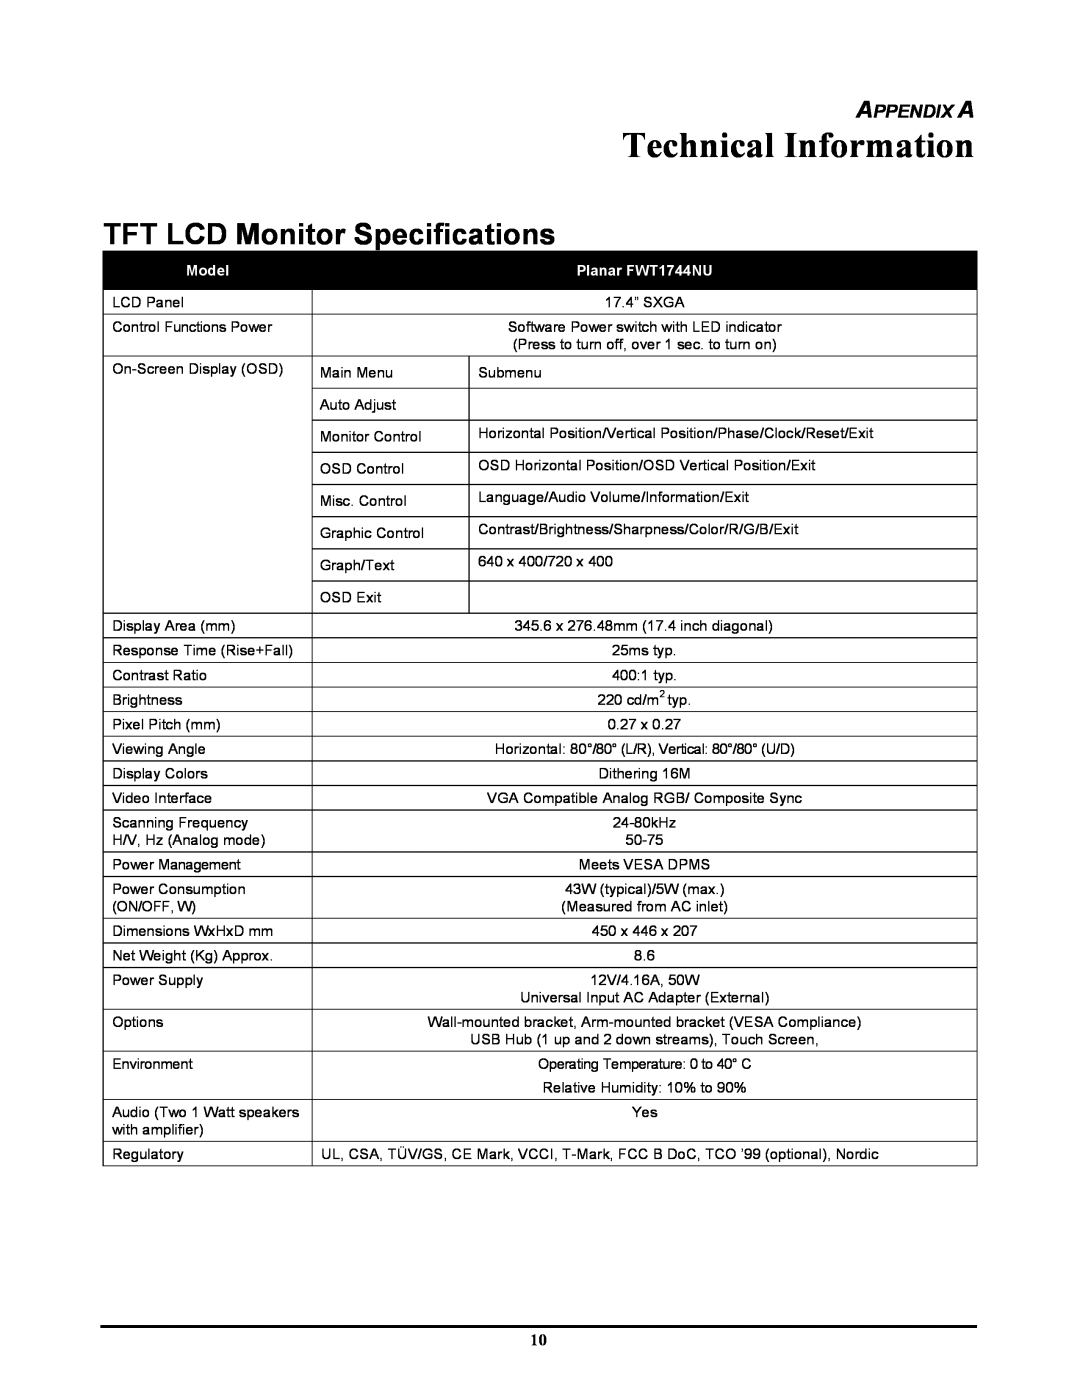 Planar manual Technical Information, TFT LCD Monitor Specifications, Appendix A, Model, Planar FWT1744NU 